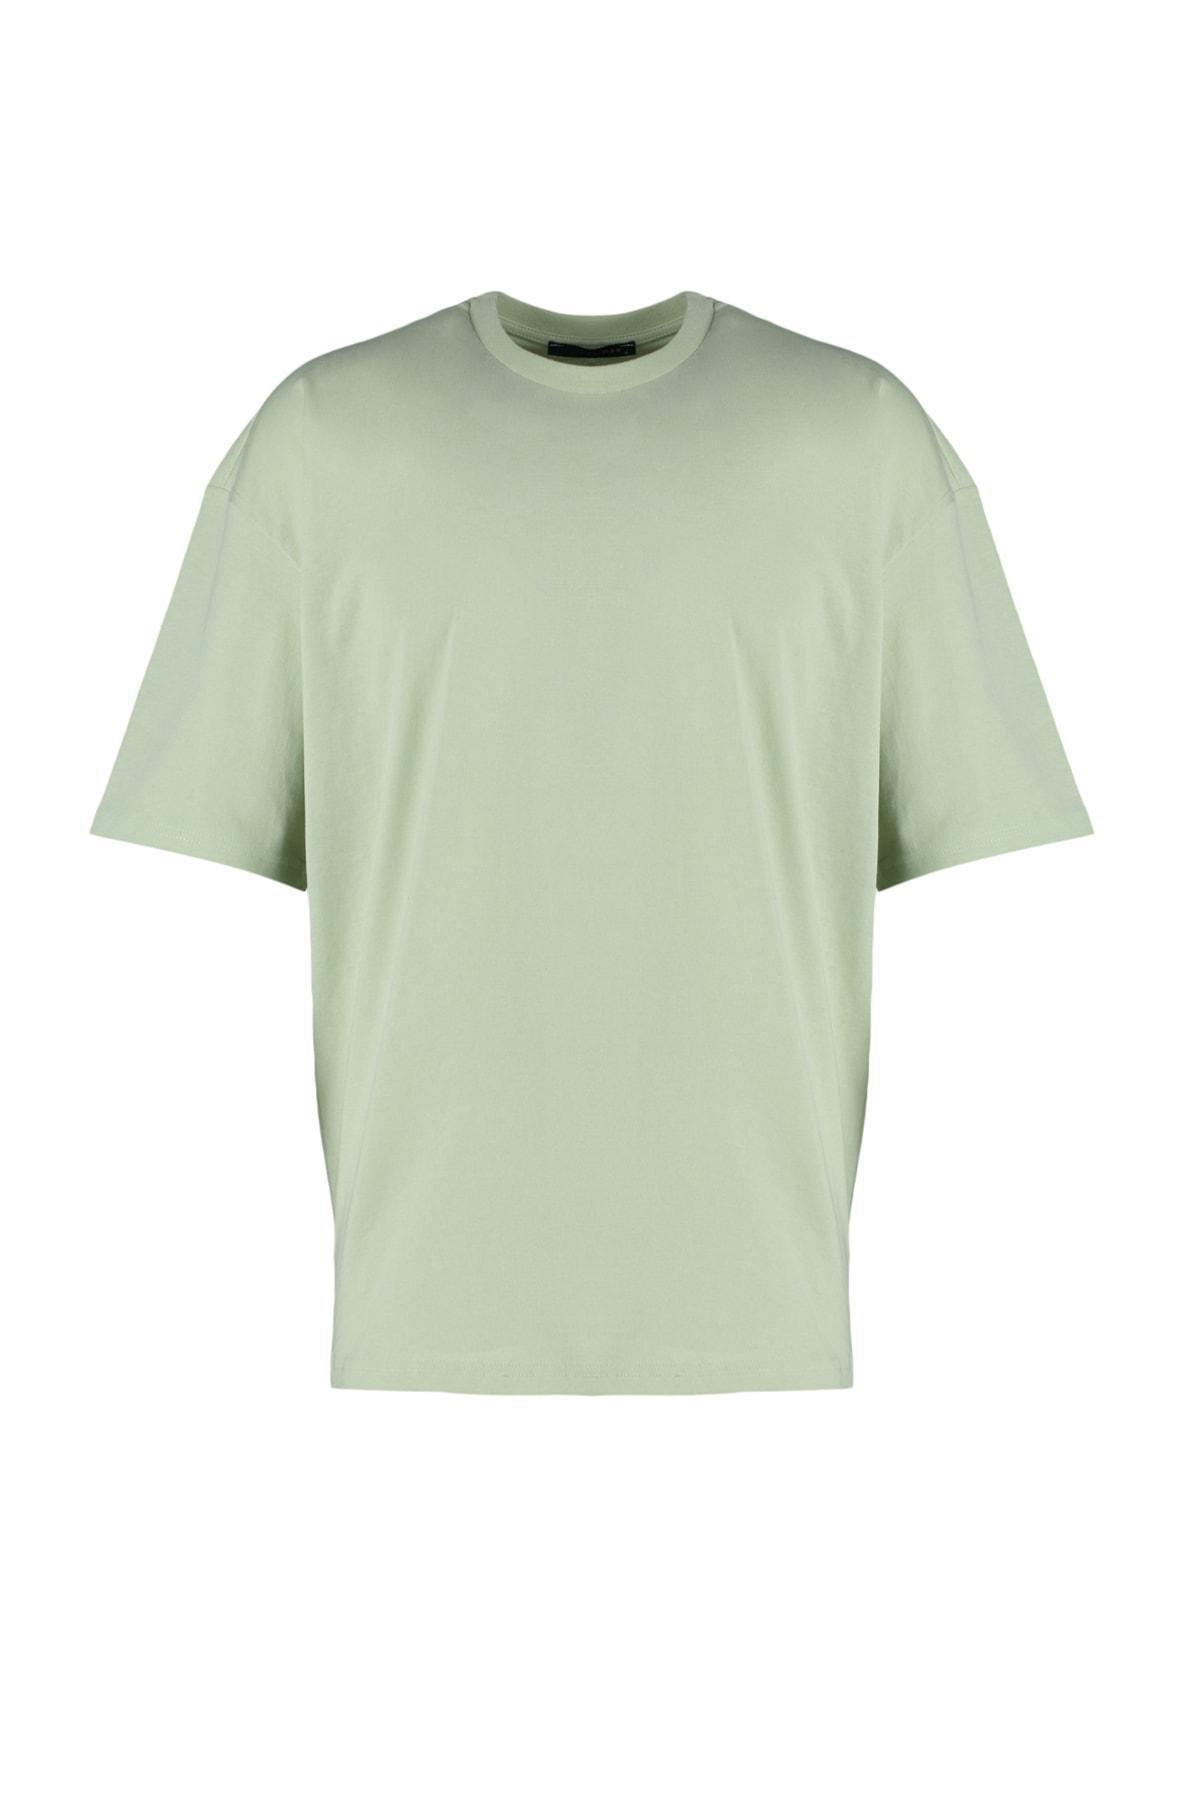 Trendyol - Green Oversize Crew Neck T-Shirt